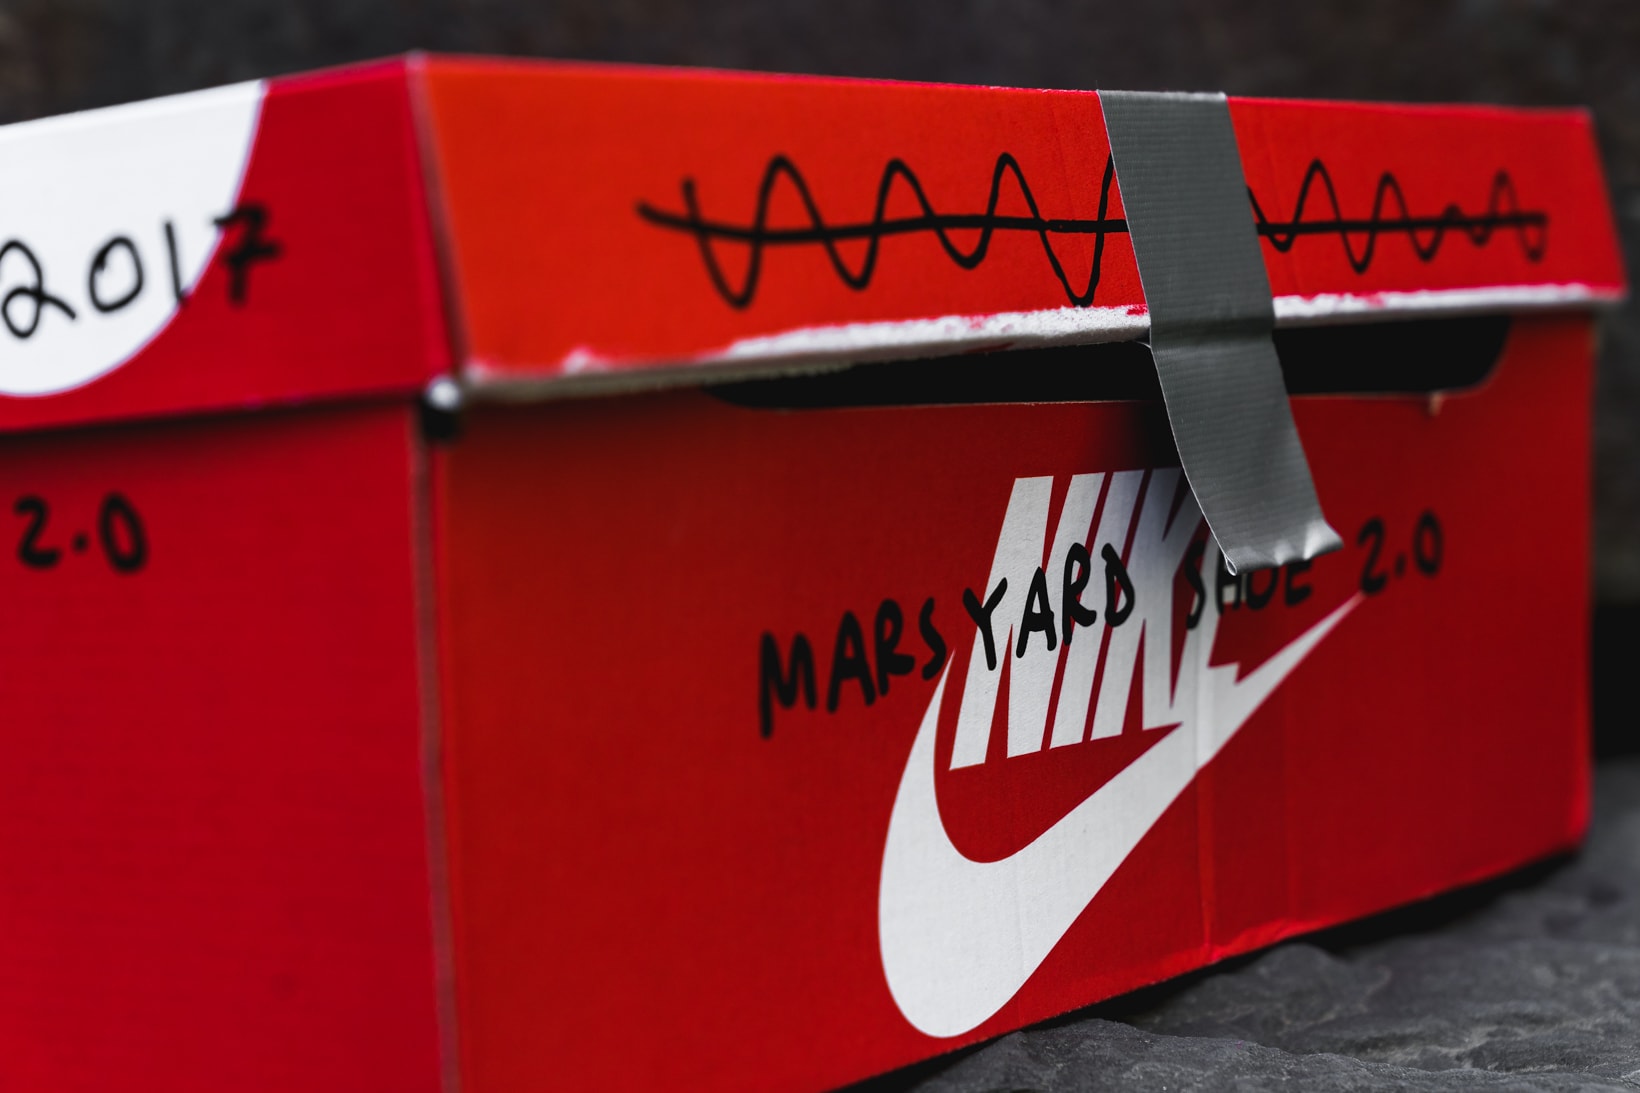 Tom Sachs NikeCraft Mars Yard Shoe 2.0